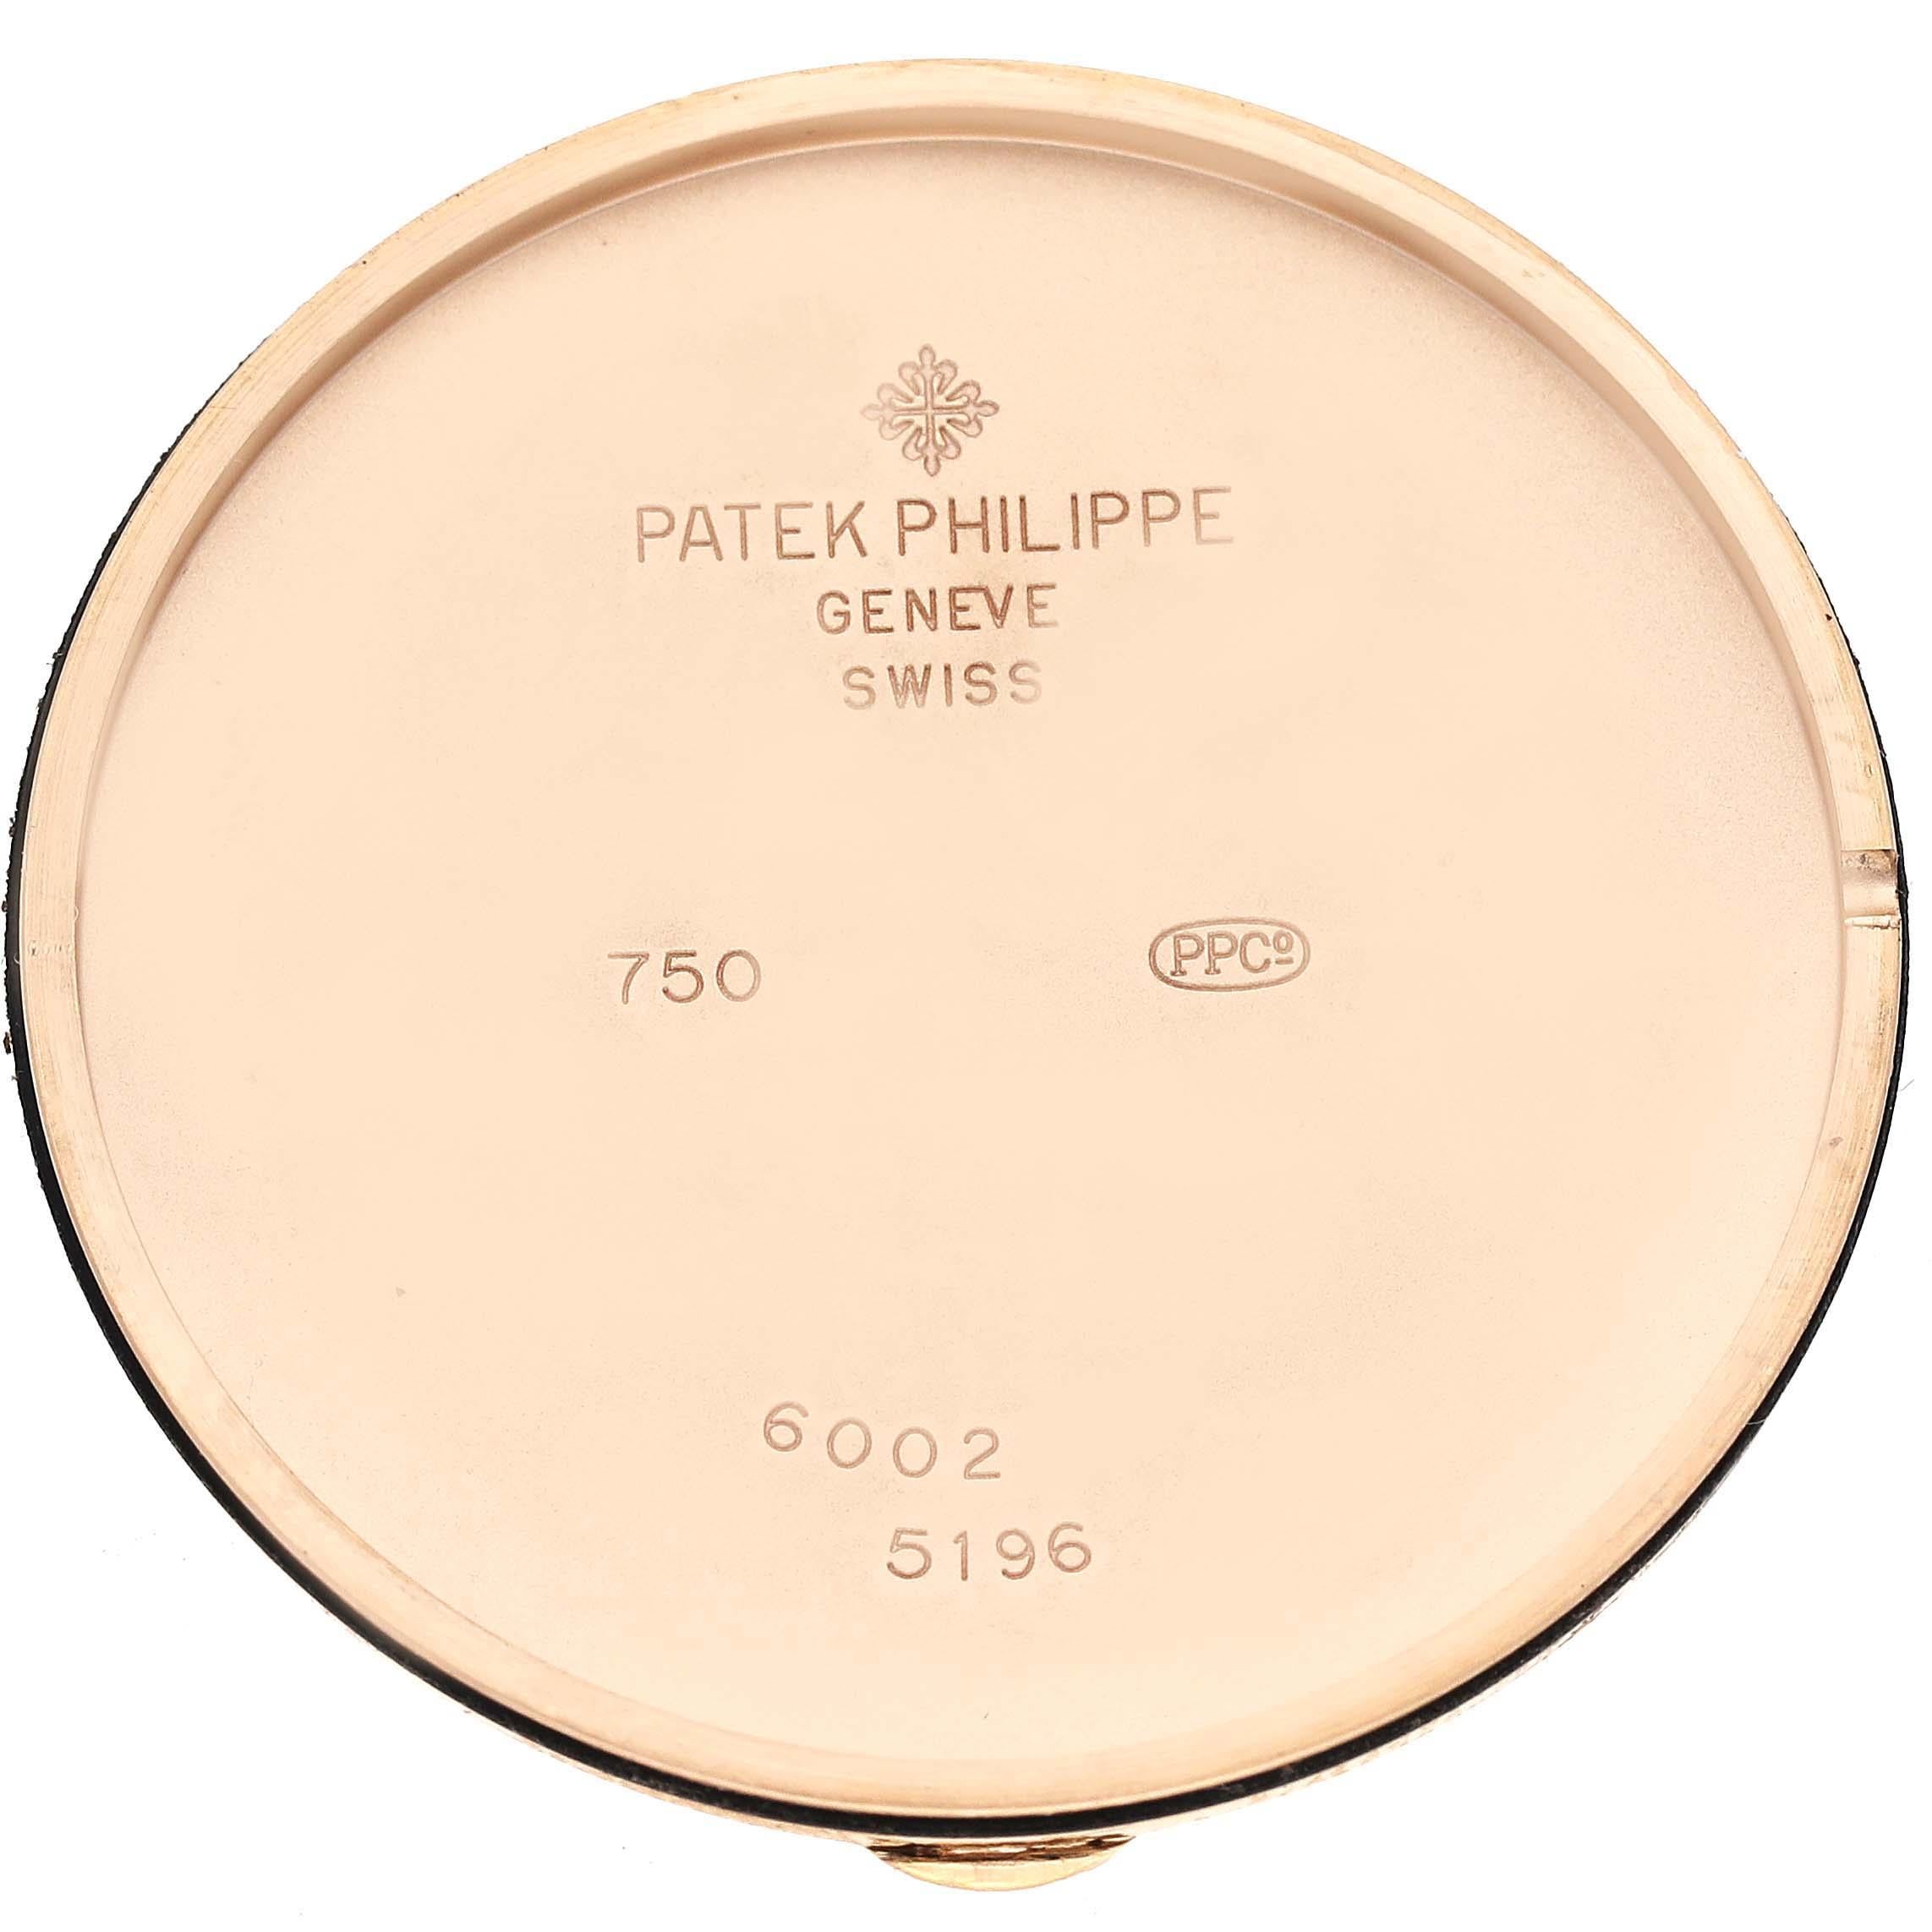 Patek Philippe Calatrava Rose Gold Silver Dial Mens Watch 5196 In Excellent Condition For Sale In Atlanta, GA